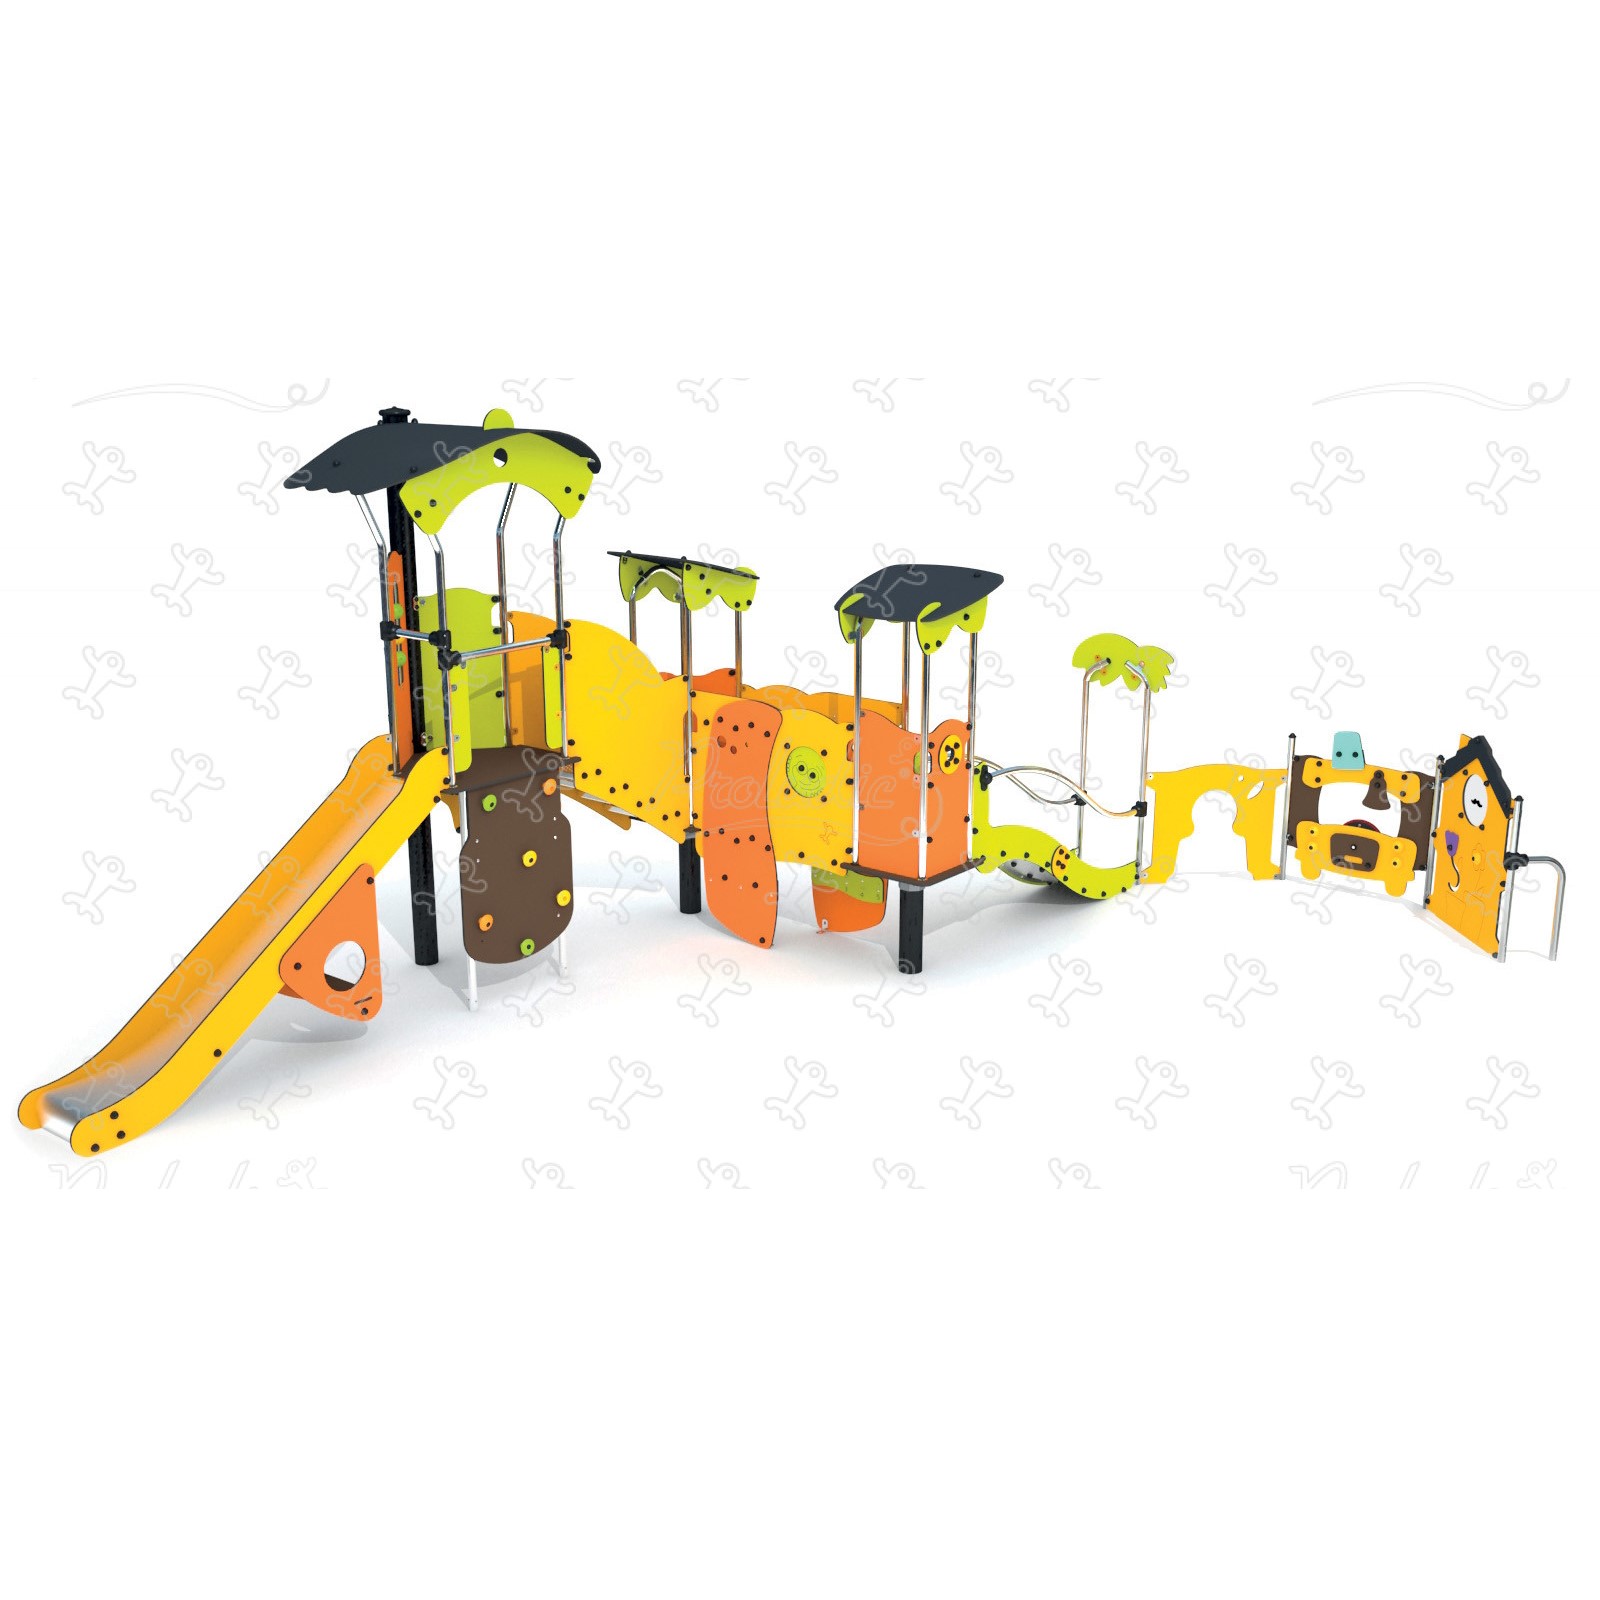 Proludic playground   J38708